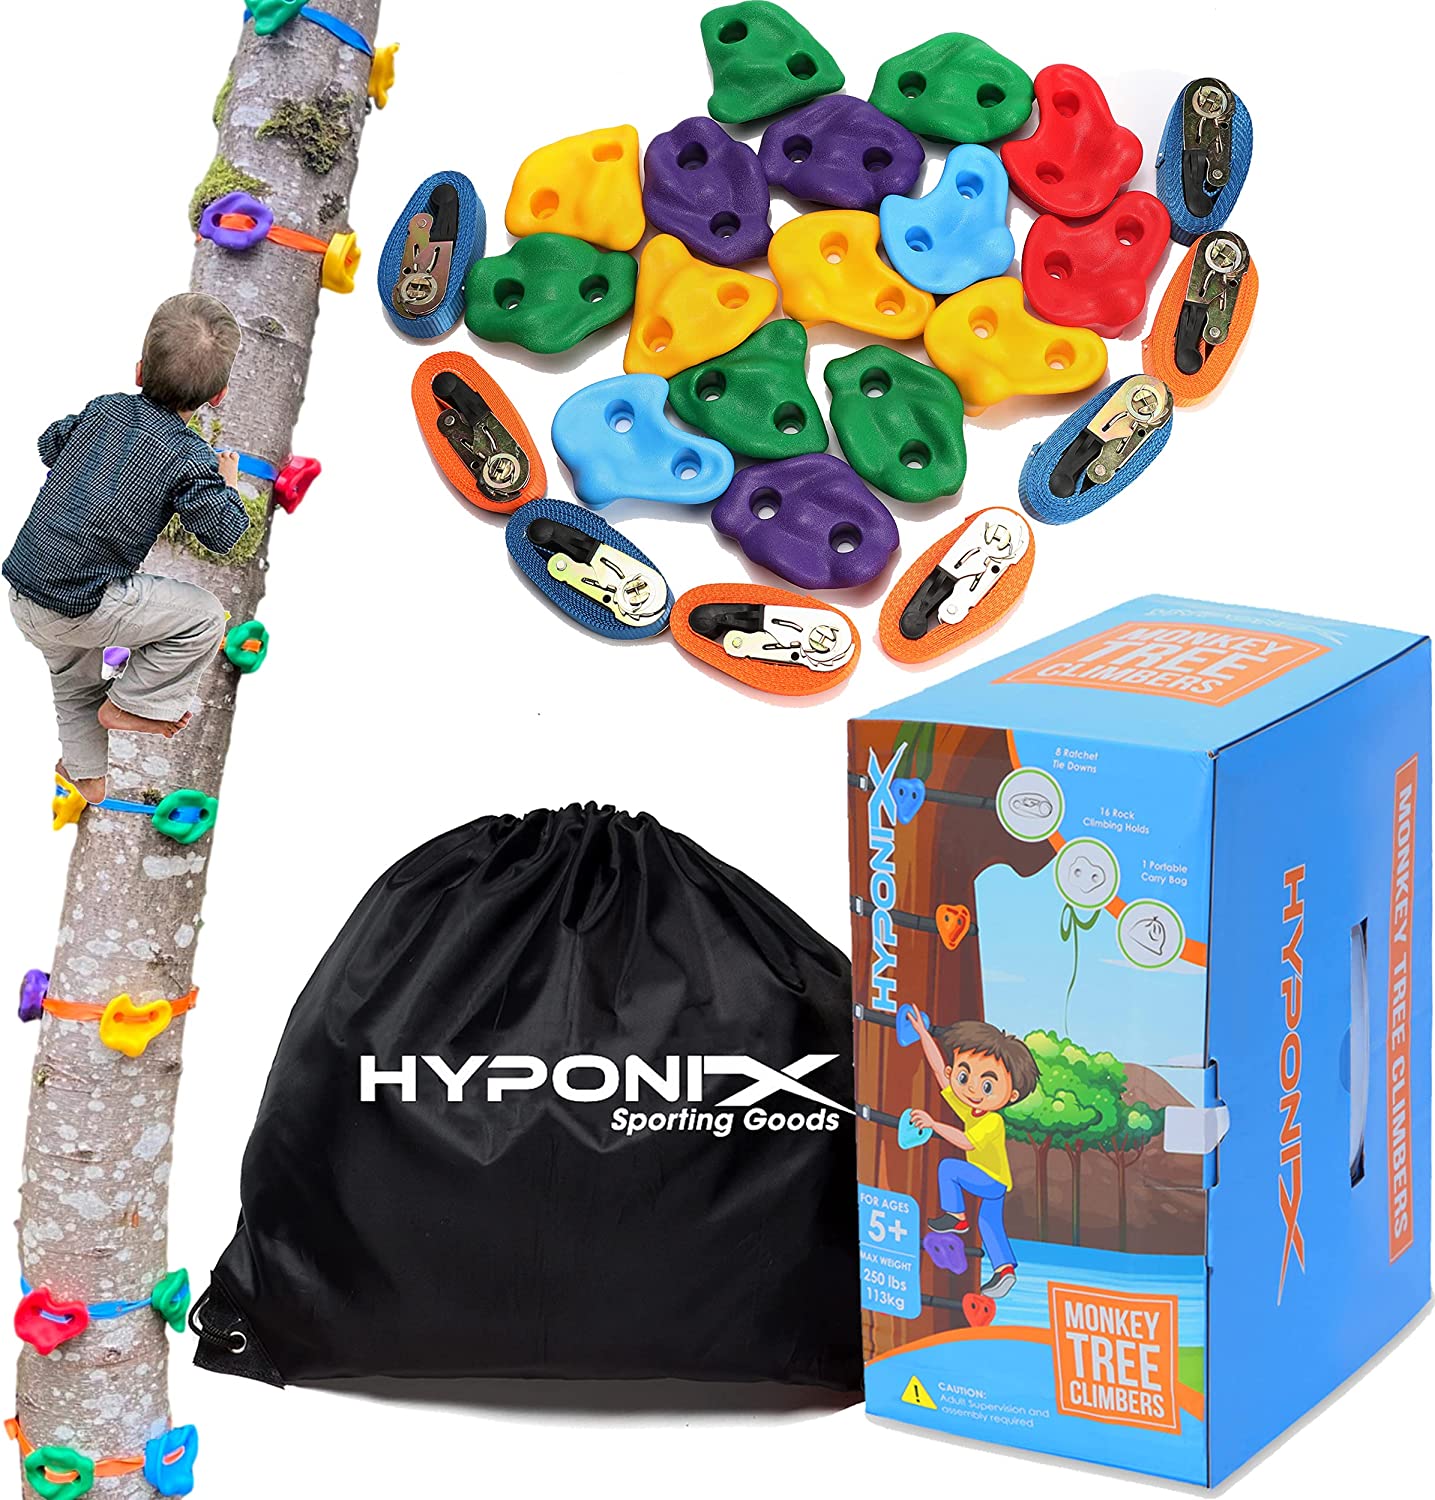 Monkey Tree Climbers - Hyponix Sporting Goods